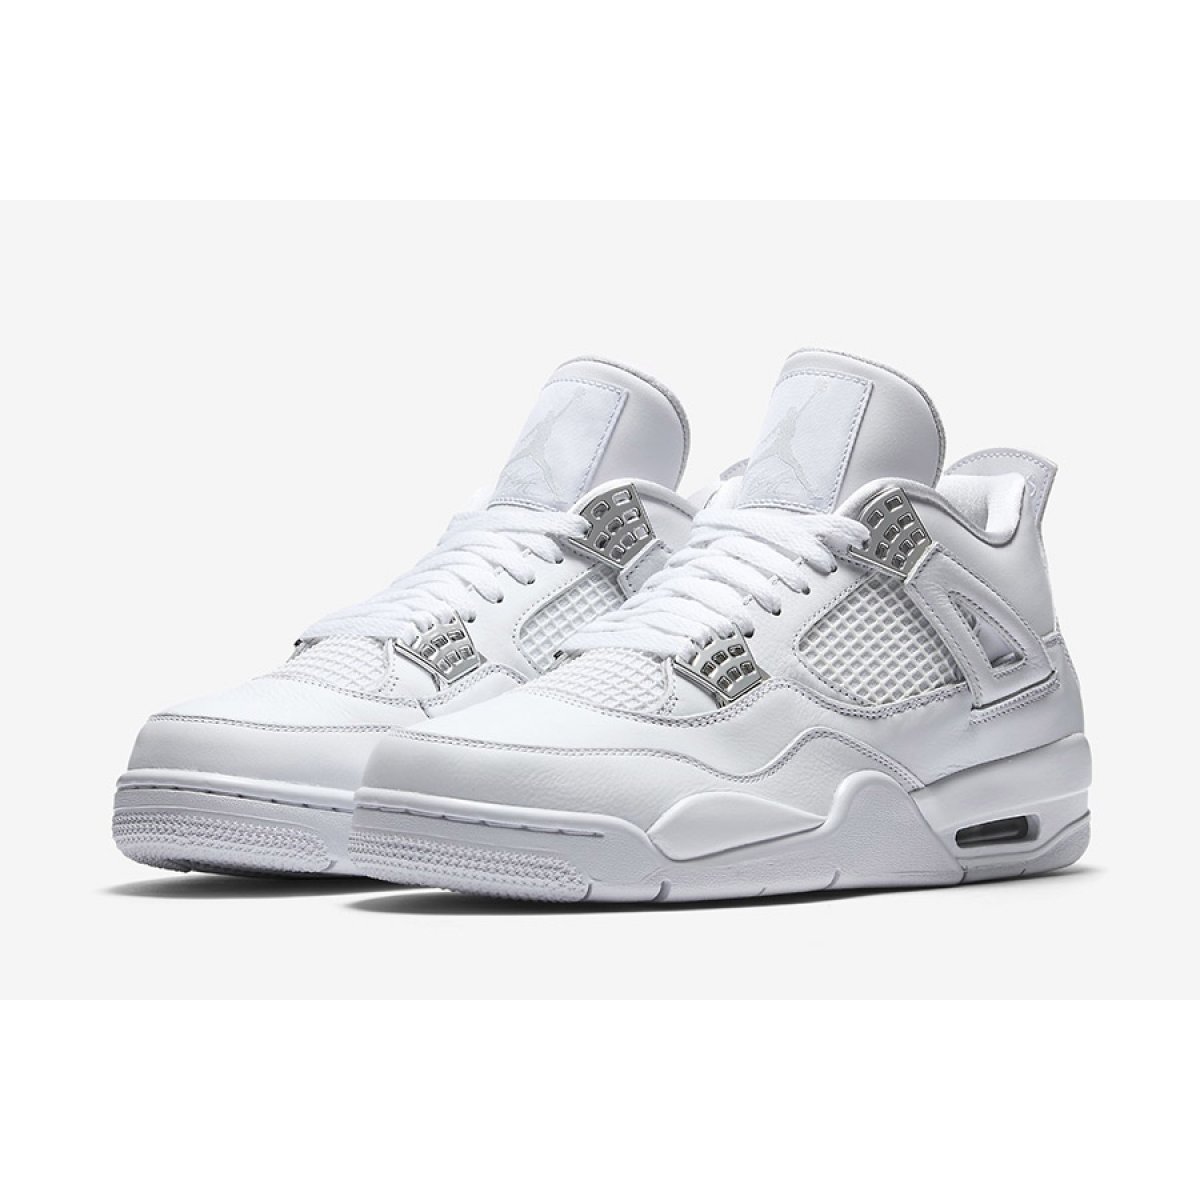 Nike Air Jordan 4 Pure Money White/Metallic Silver-Pure Platinum -  Livraison Gratuite | Spartoo ! - Chaussures Basket montante 190,00 €